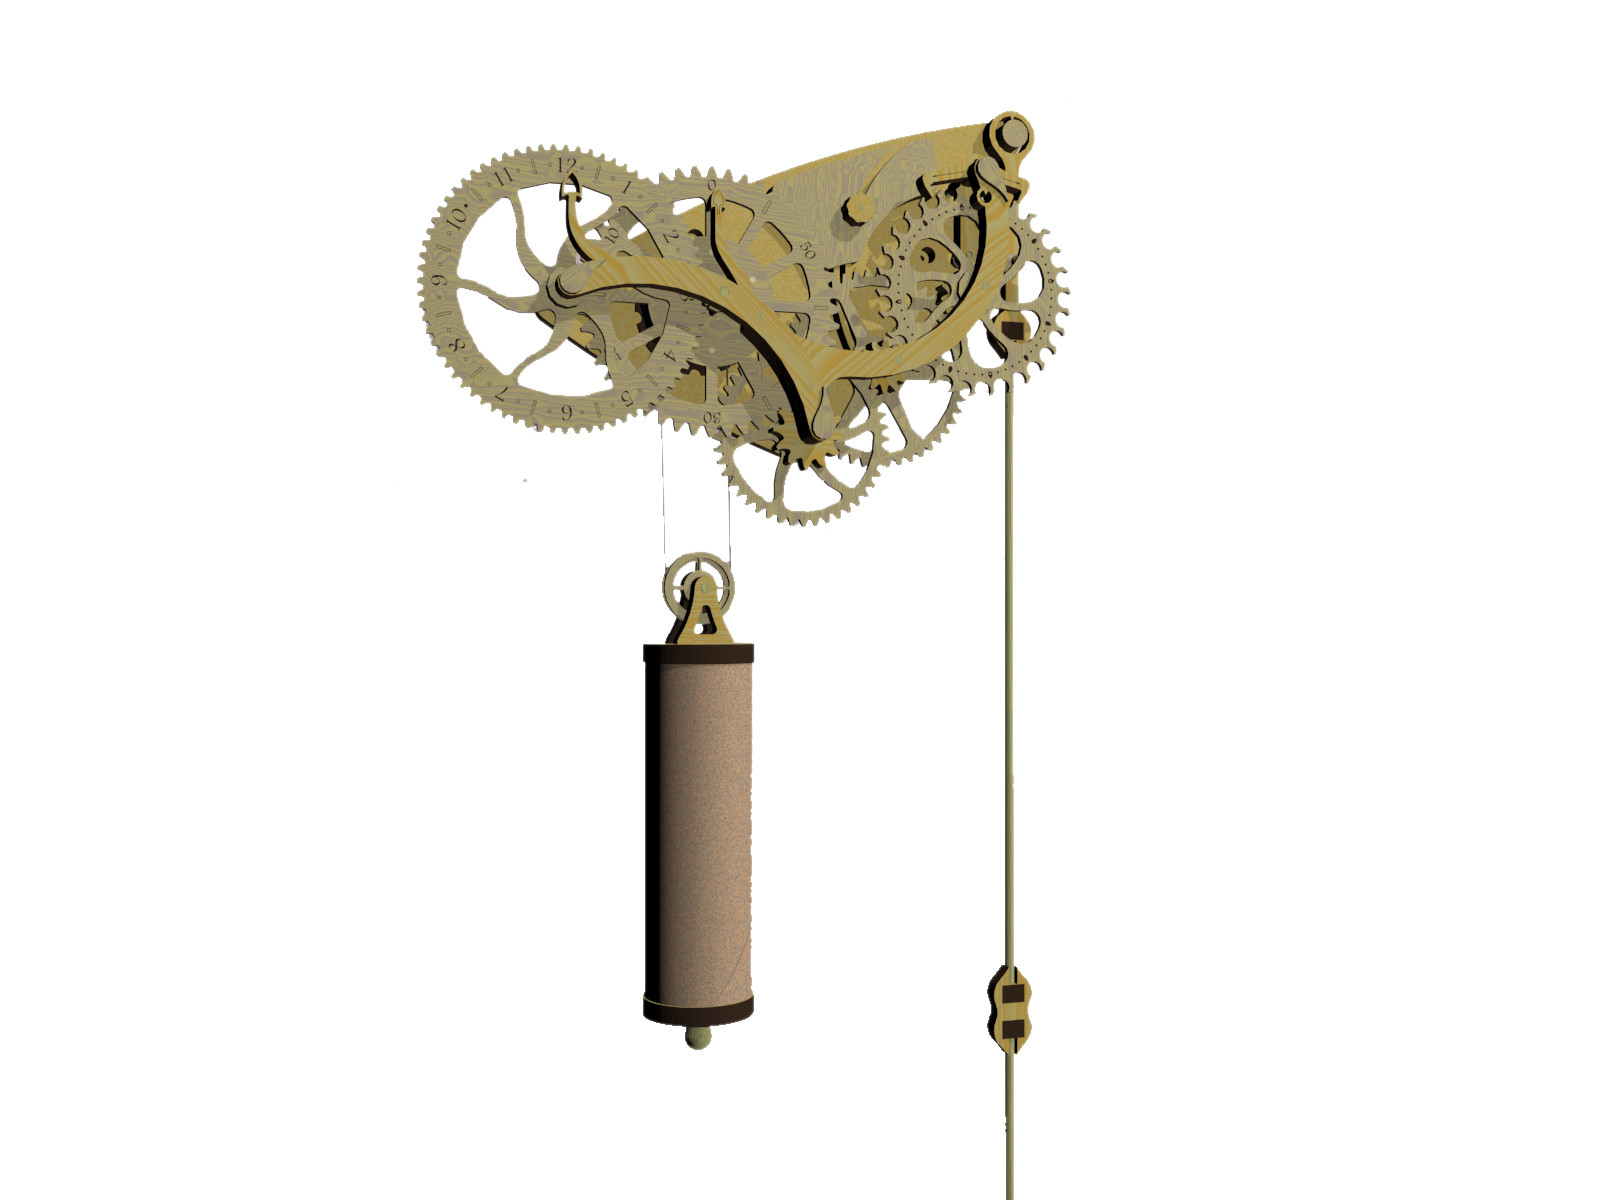 DIY Wood Clock Kit
 Abong DIY Laser Cut Wooden Wheeled Mechanical Pendulum